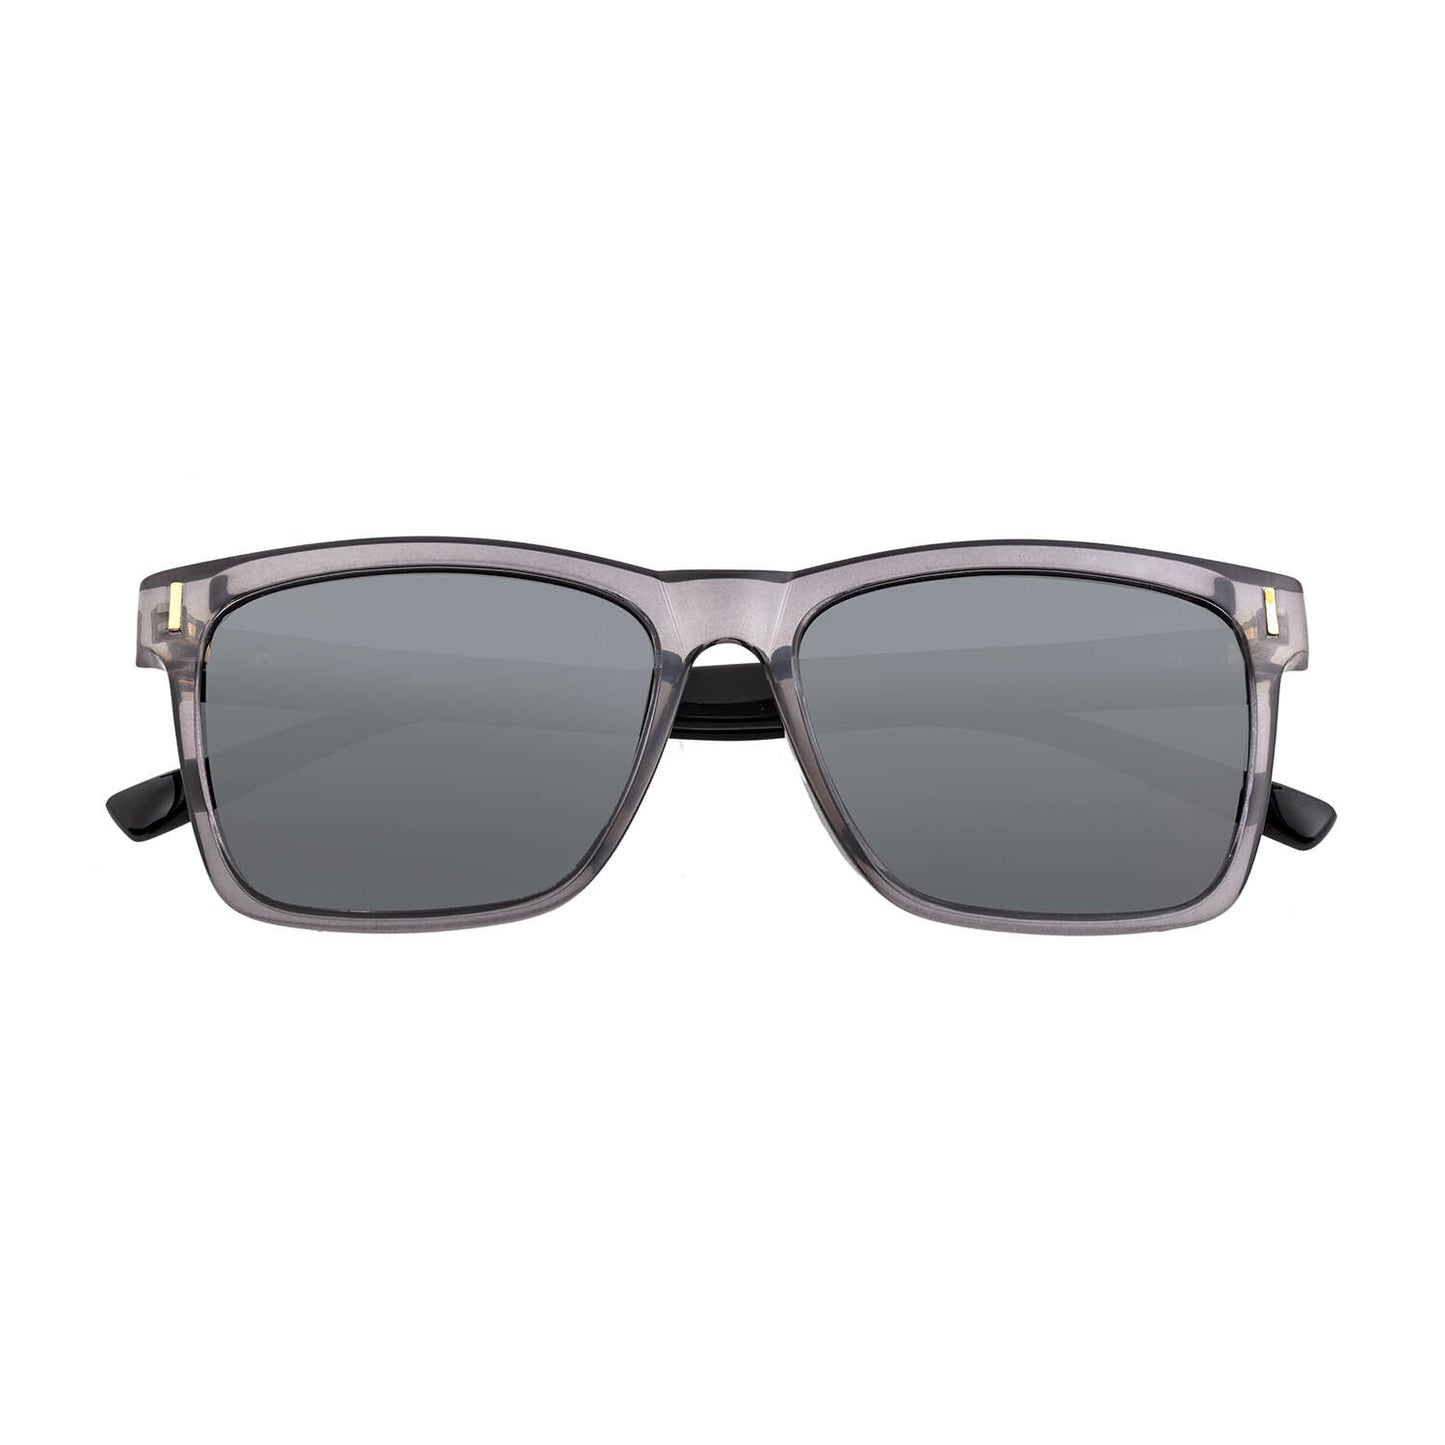 Pictor Polarized Sunglasses - Gray + Black